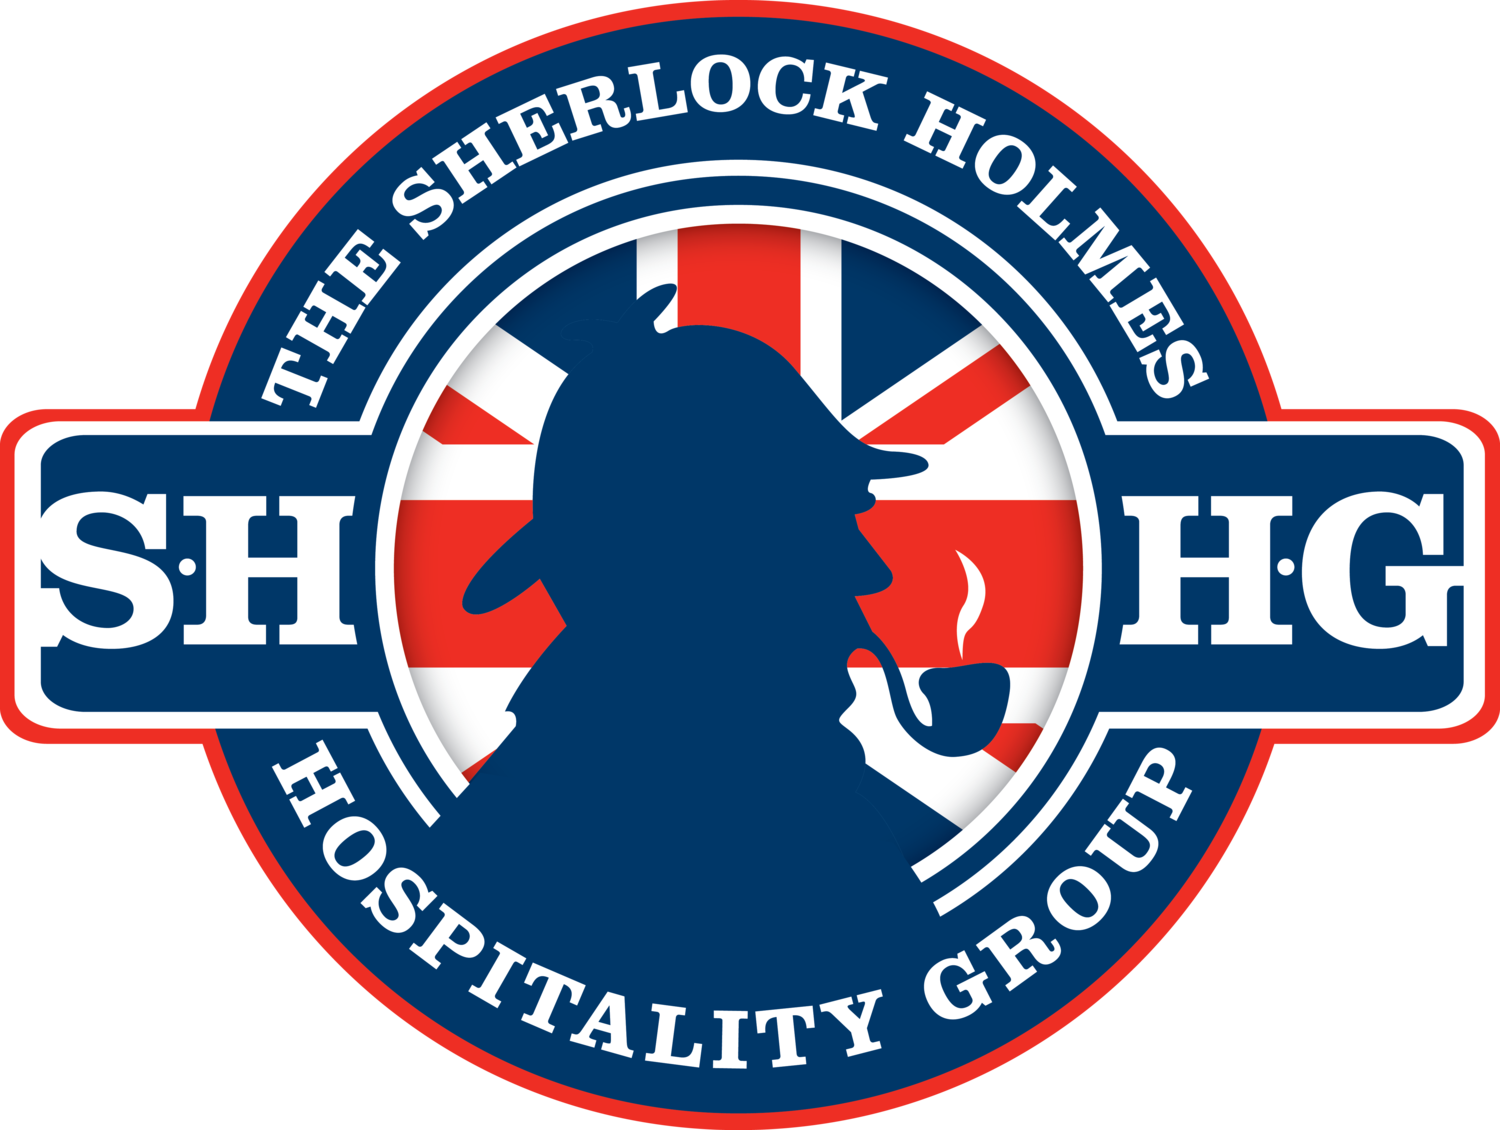 The Sherlock Holmes Hospitality Group